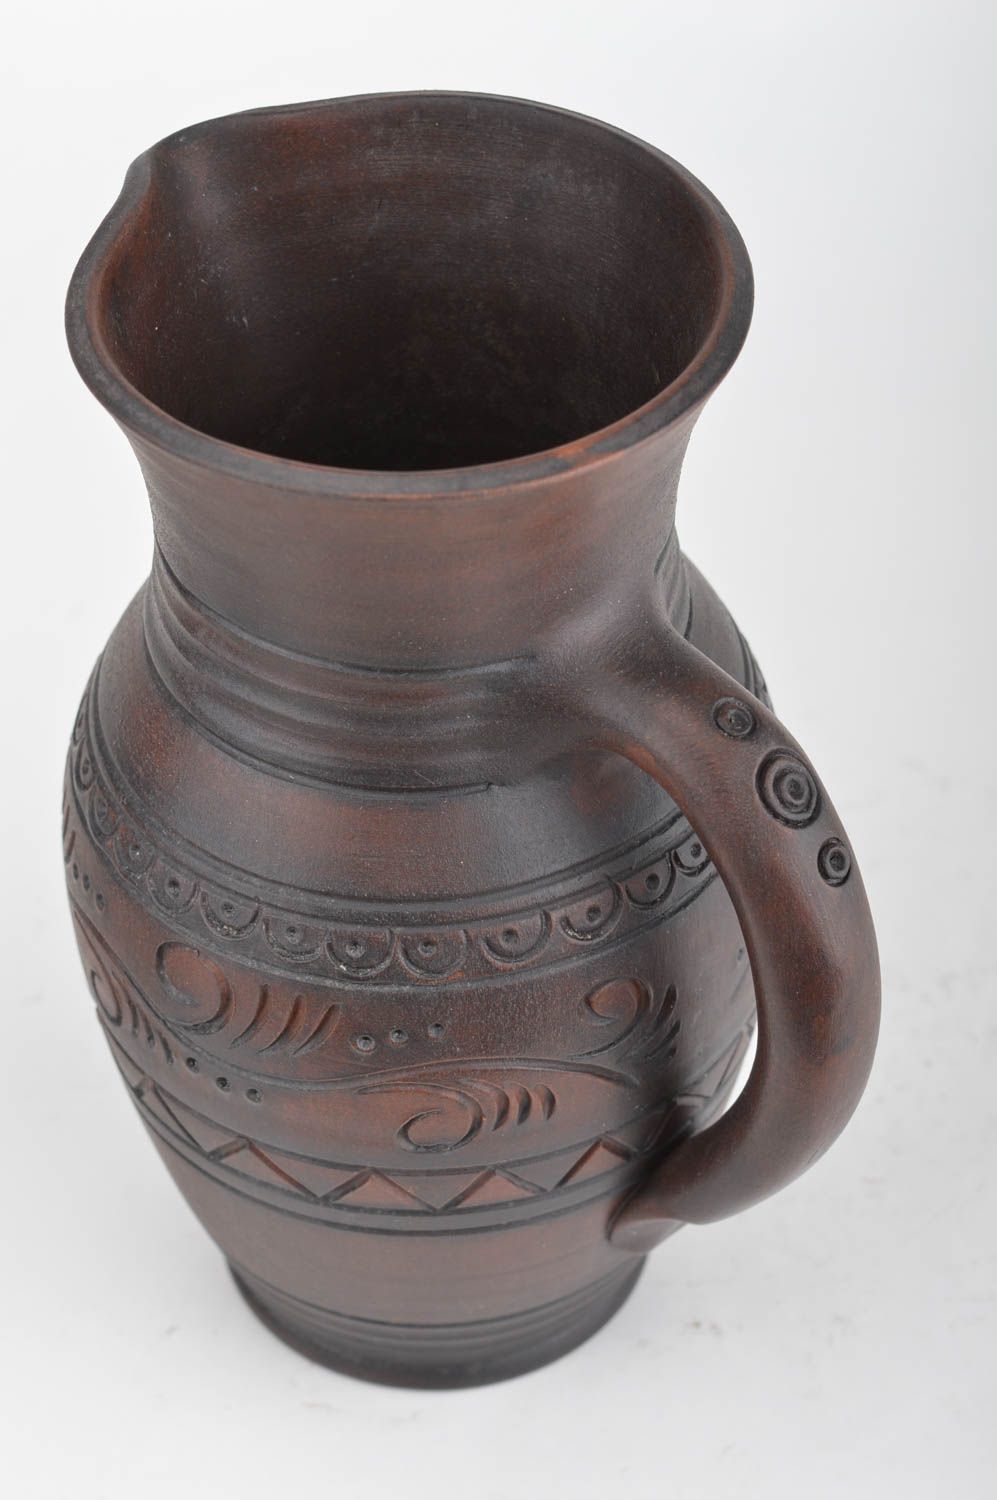 60 oz dark brown ceramic handmade water jug with handle in classic style 2 lb photo 2